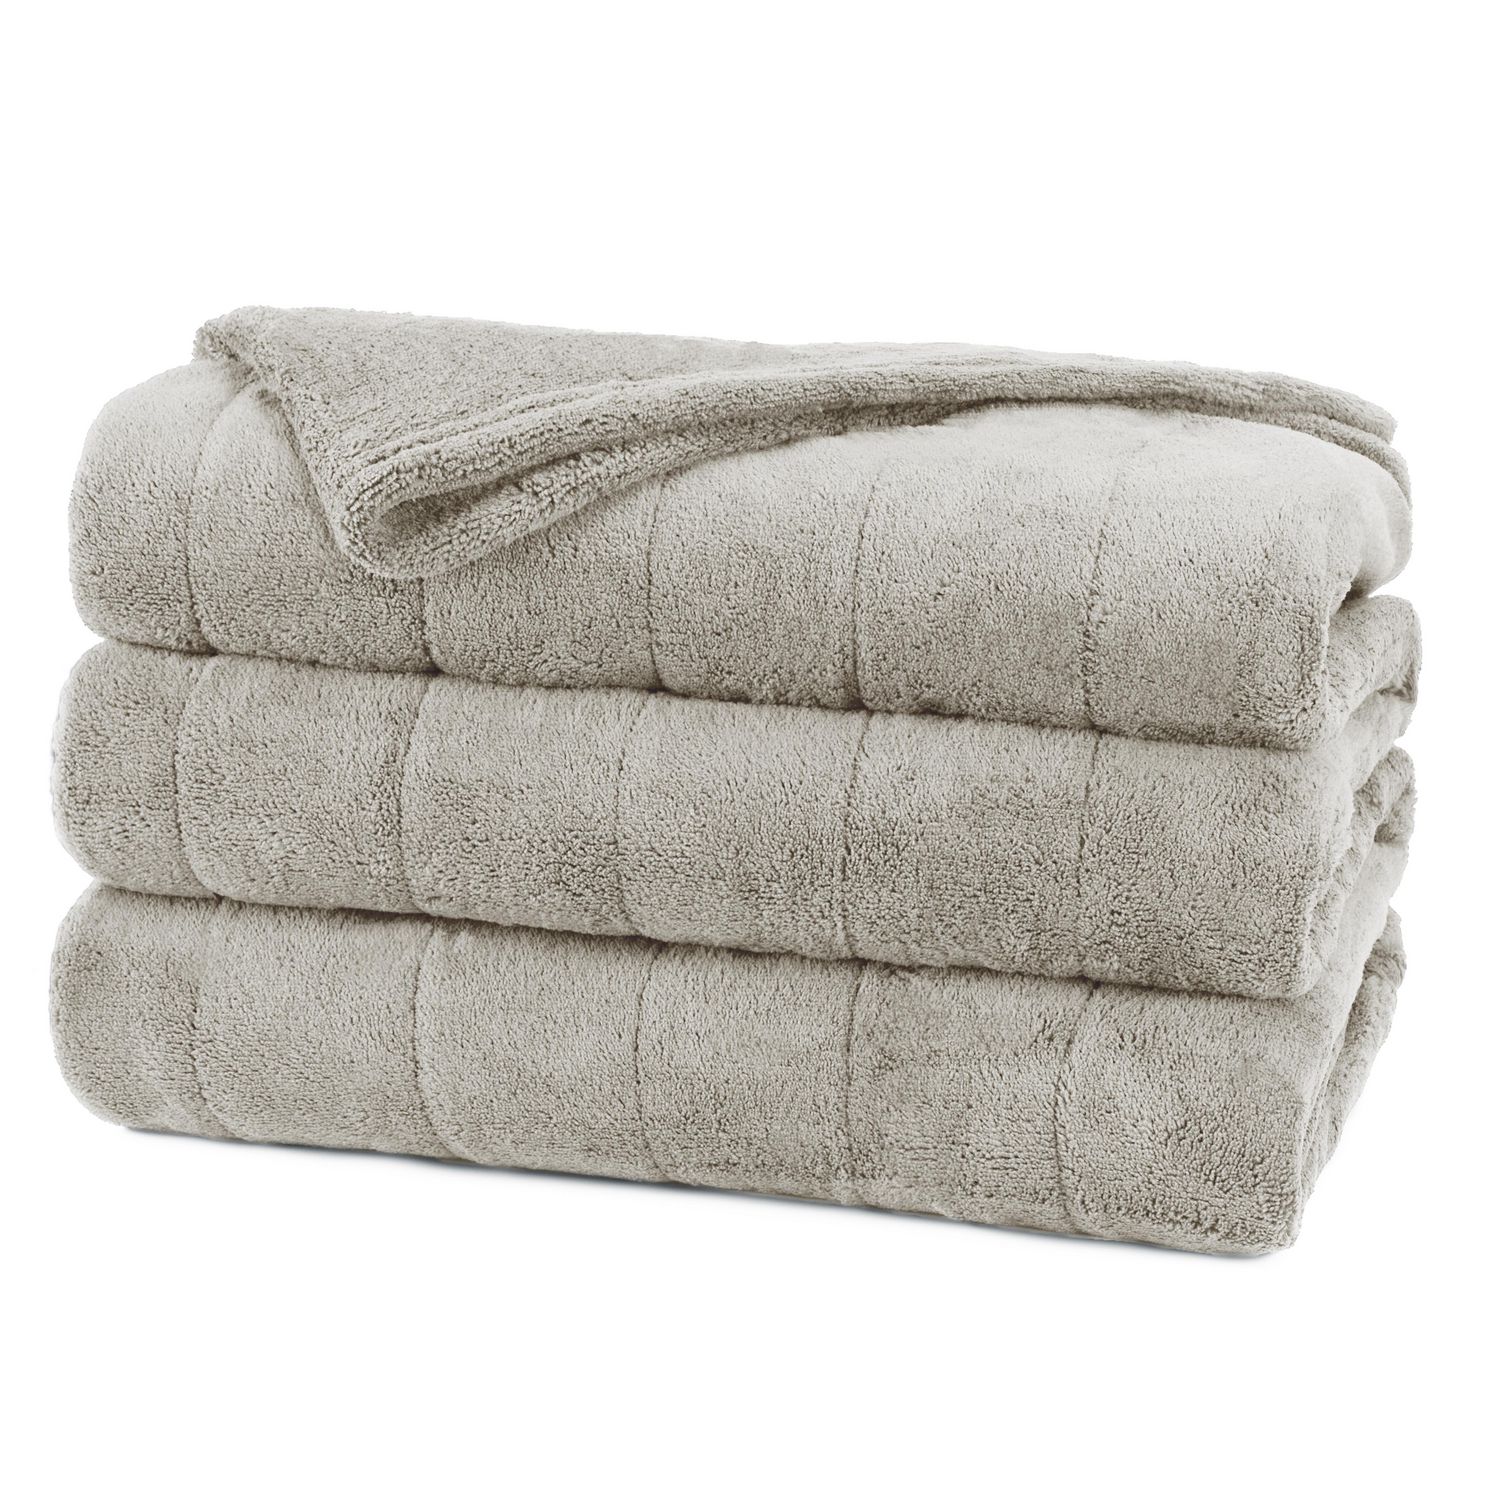 Sunbeam® Microplush Heated Blanket, King | Walmart Canada